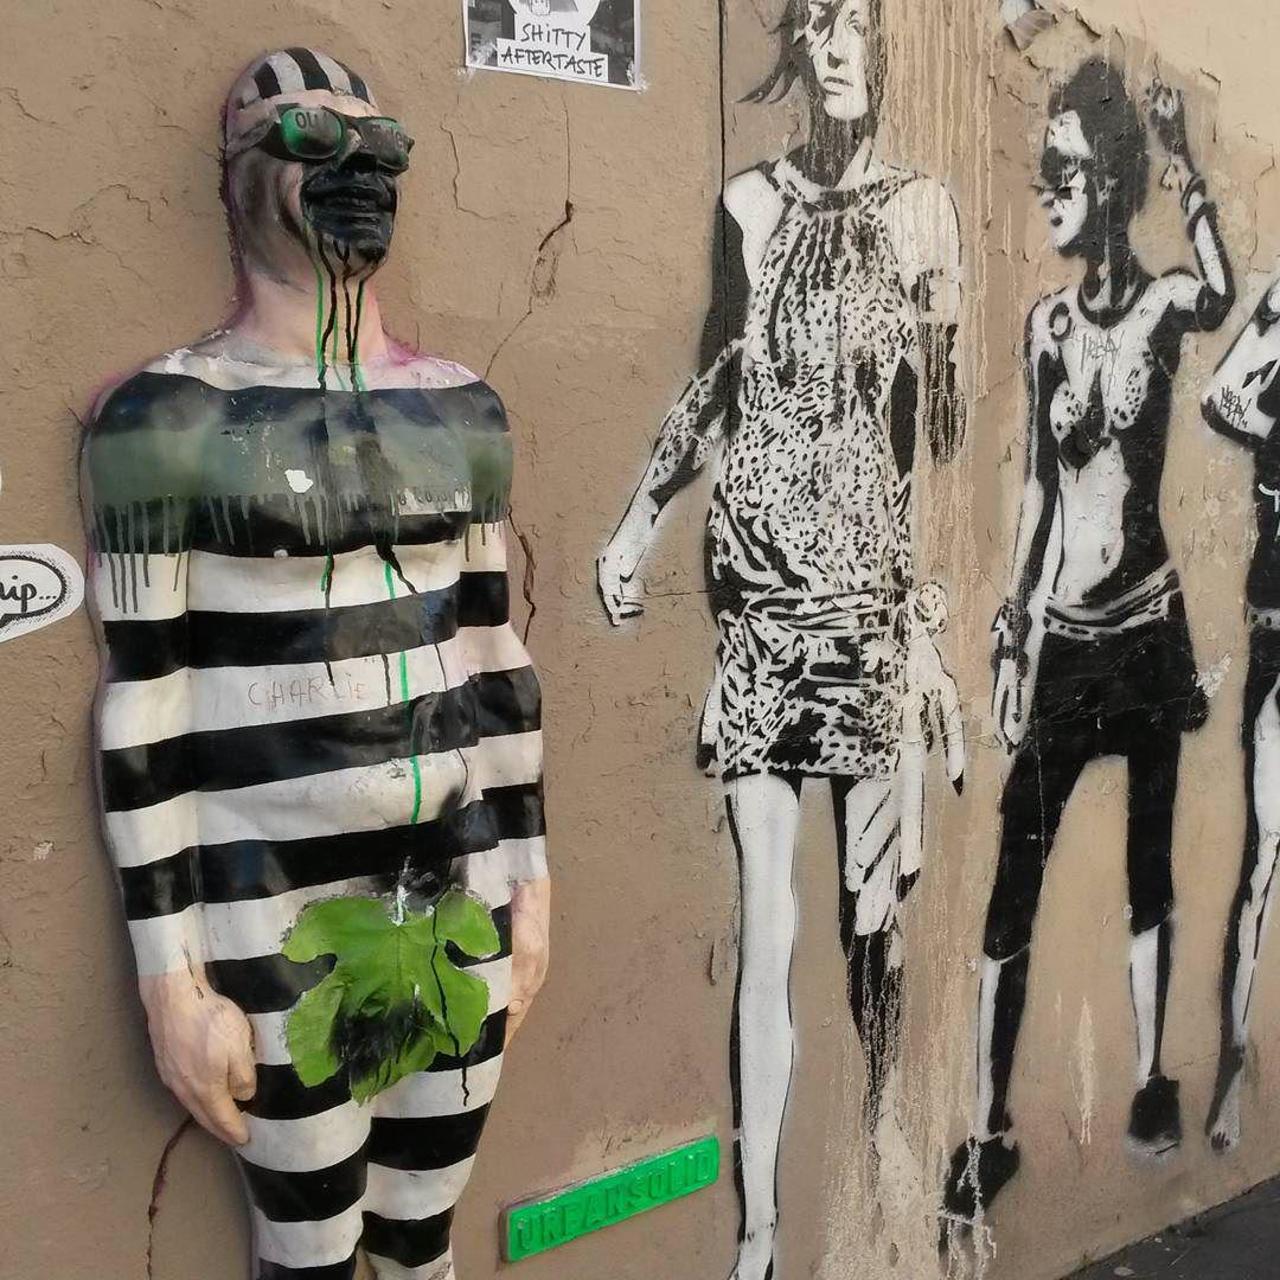 #Paris #graffiti photo by @le_cyclopede http://ift.tt/1L2EiQ1 #StreetArt http://t.co/V8X9VxejjE